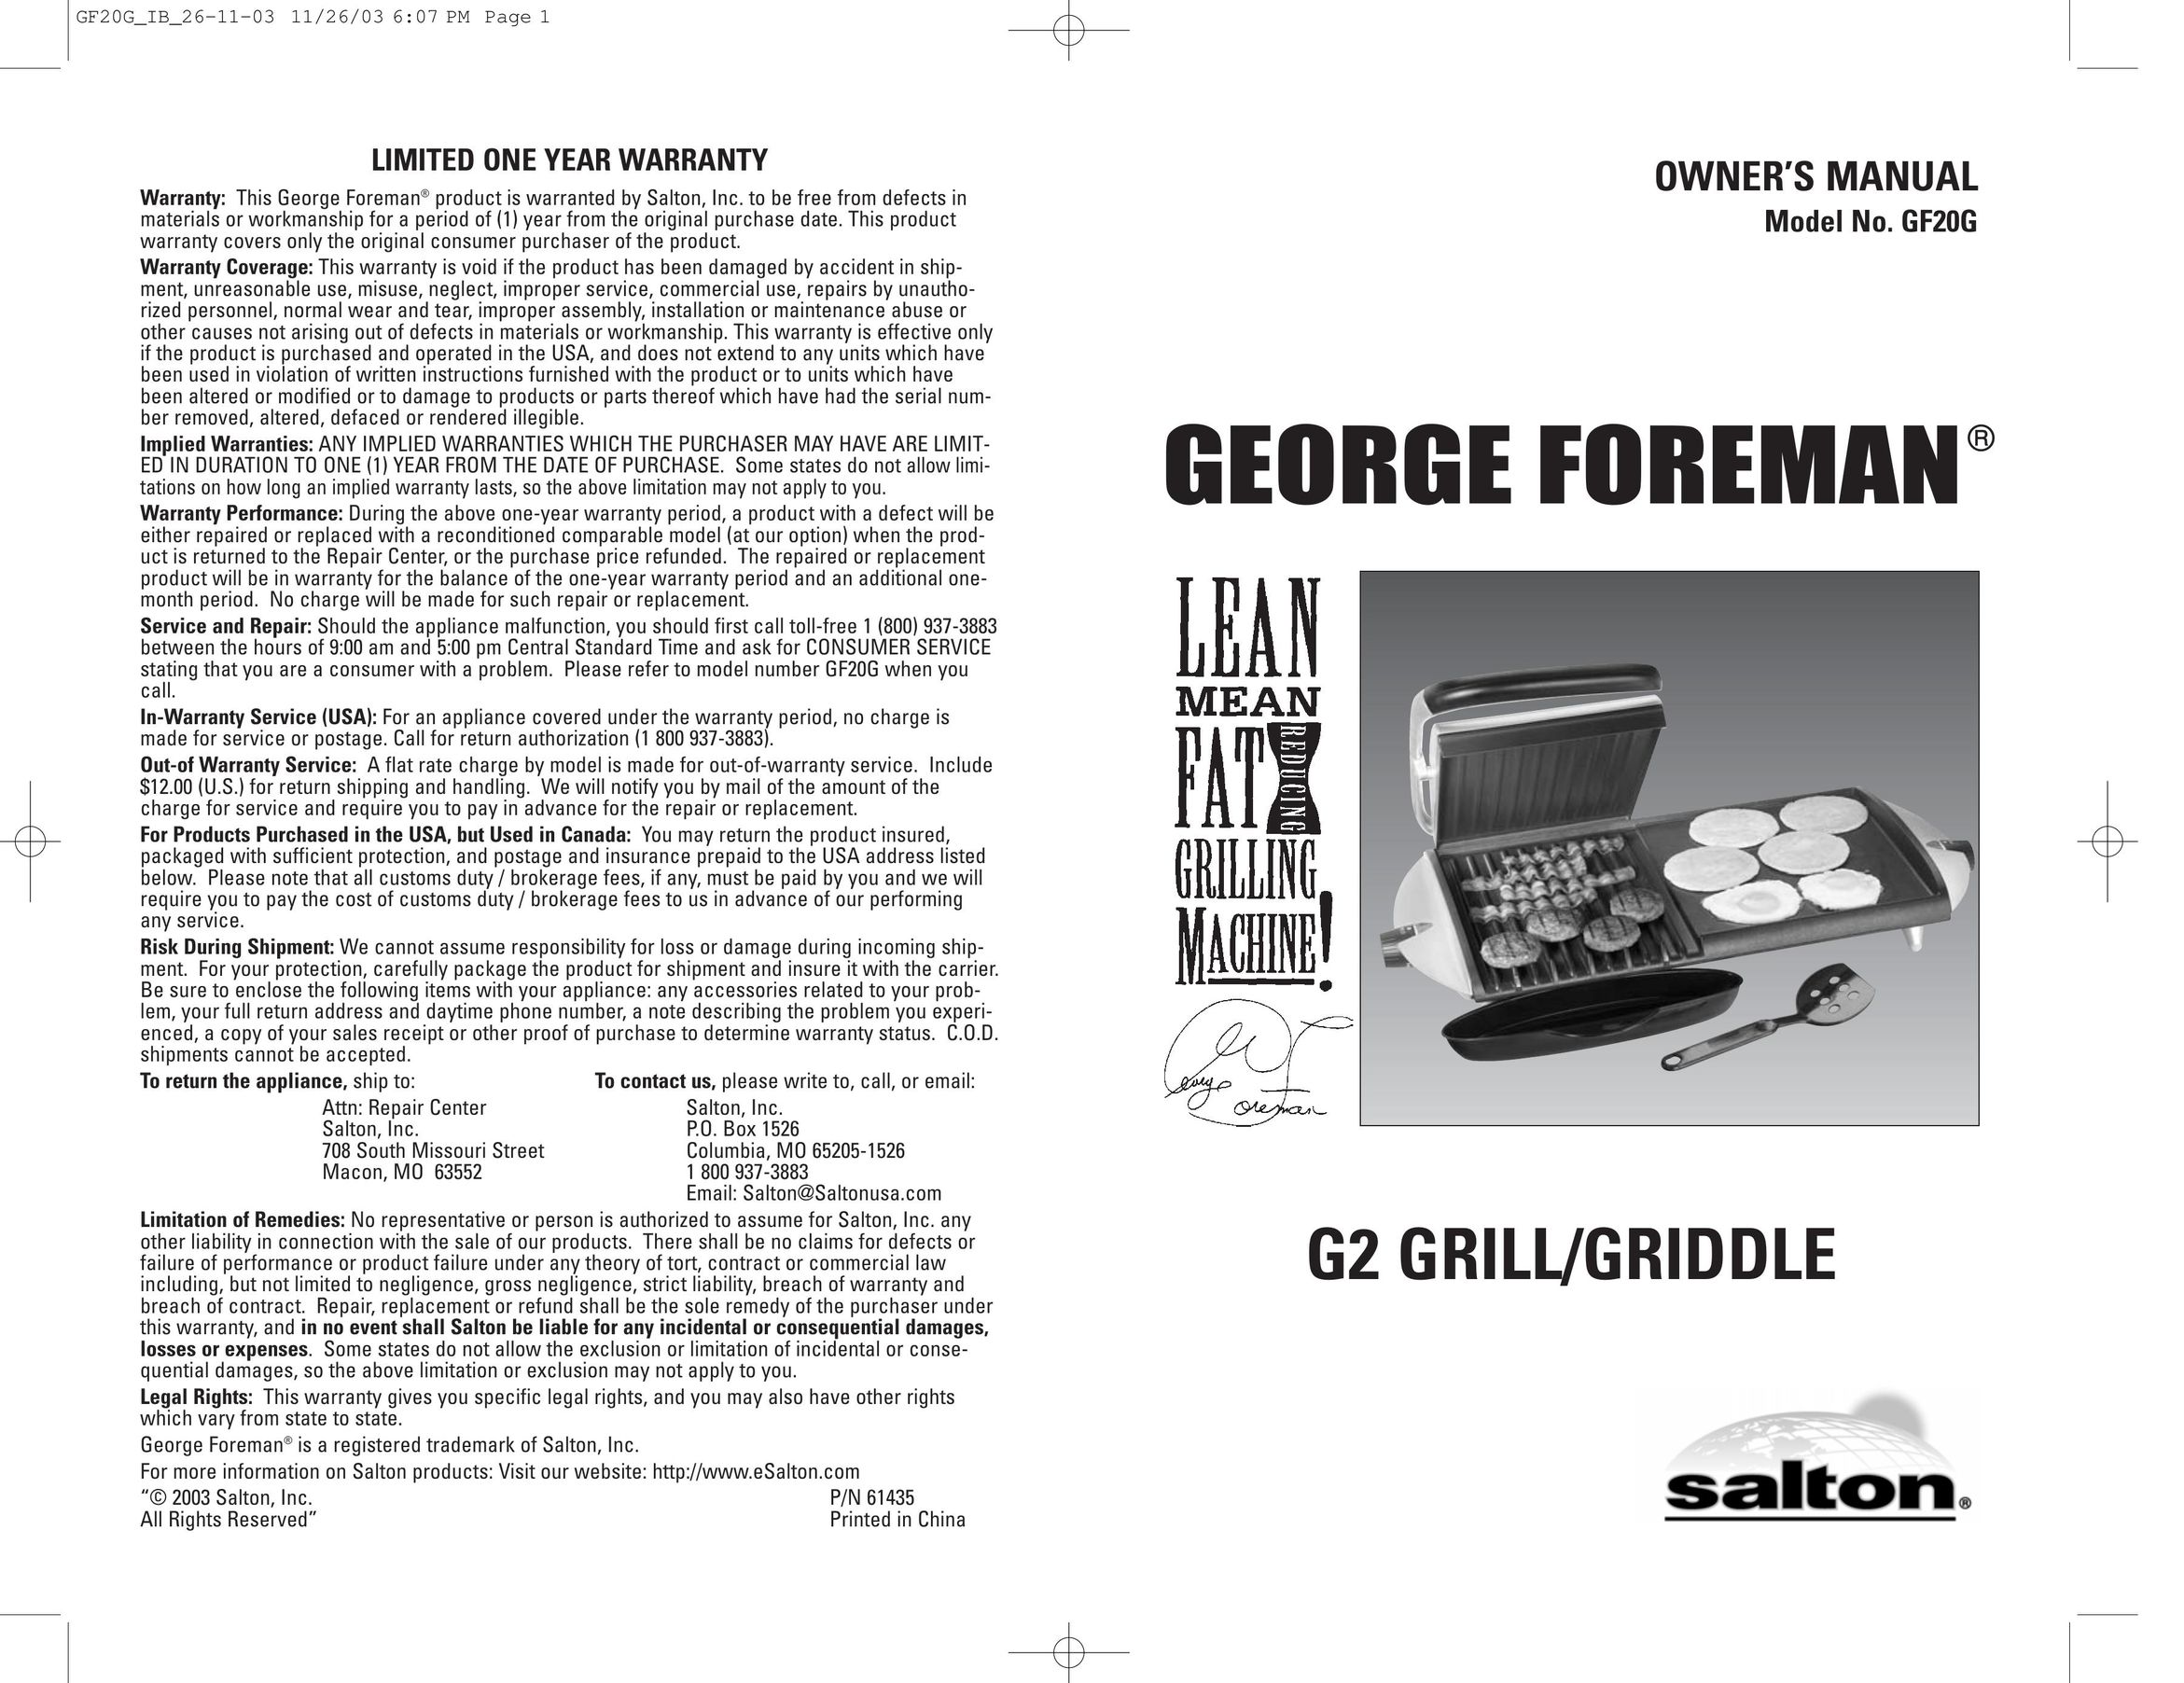 George Foreman GF20G Griddle User Manual